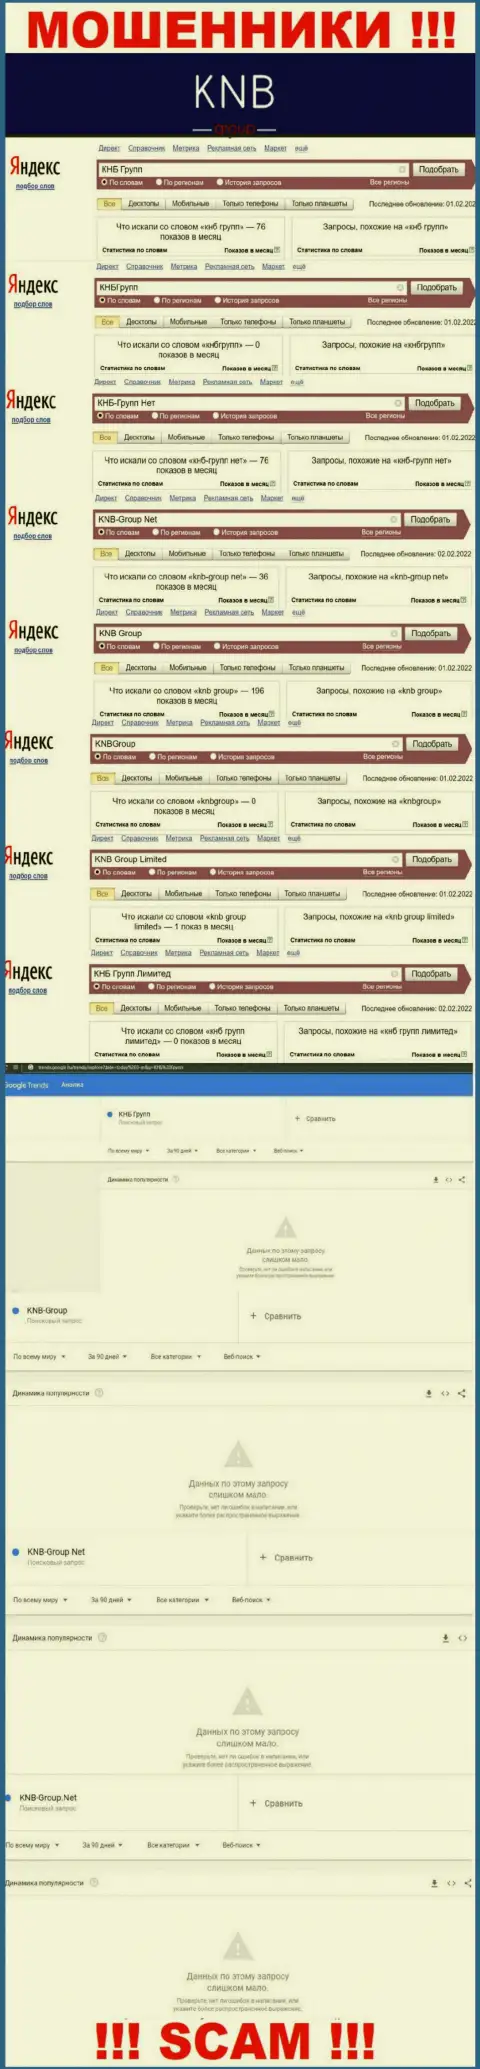 Скриншот статистики онлайн запросов по незаконно действующей конторе KNB Group